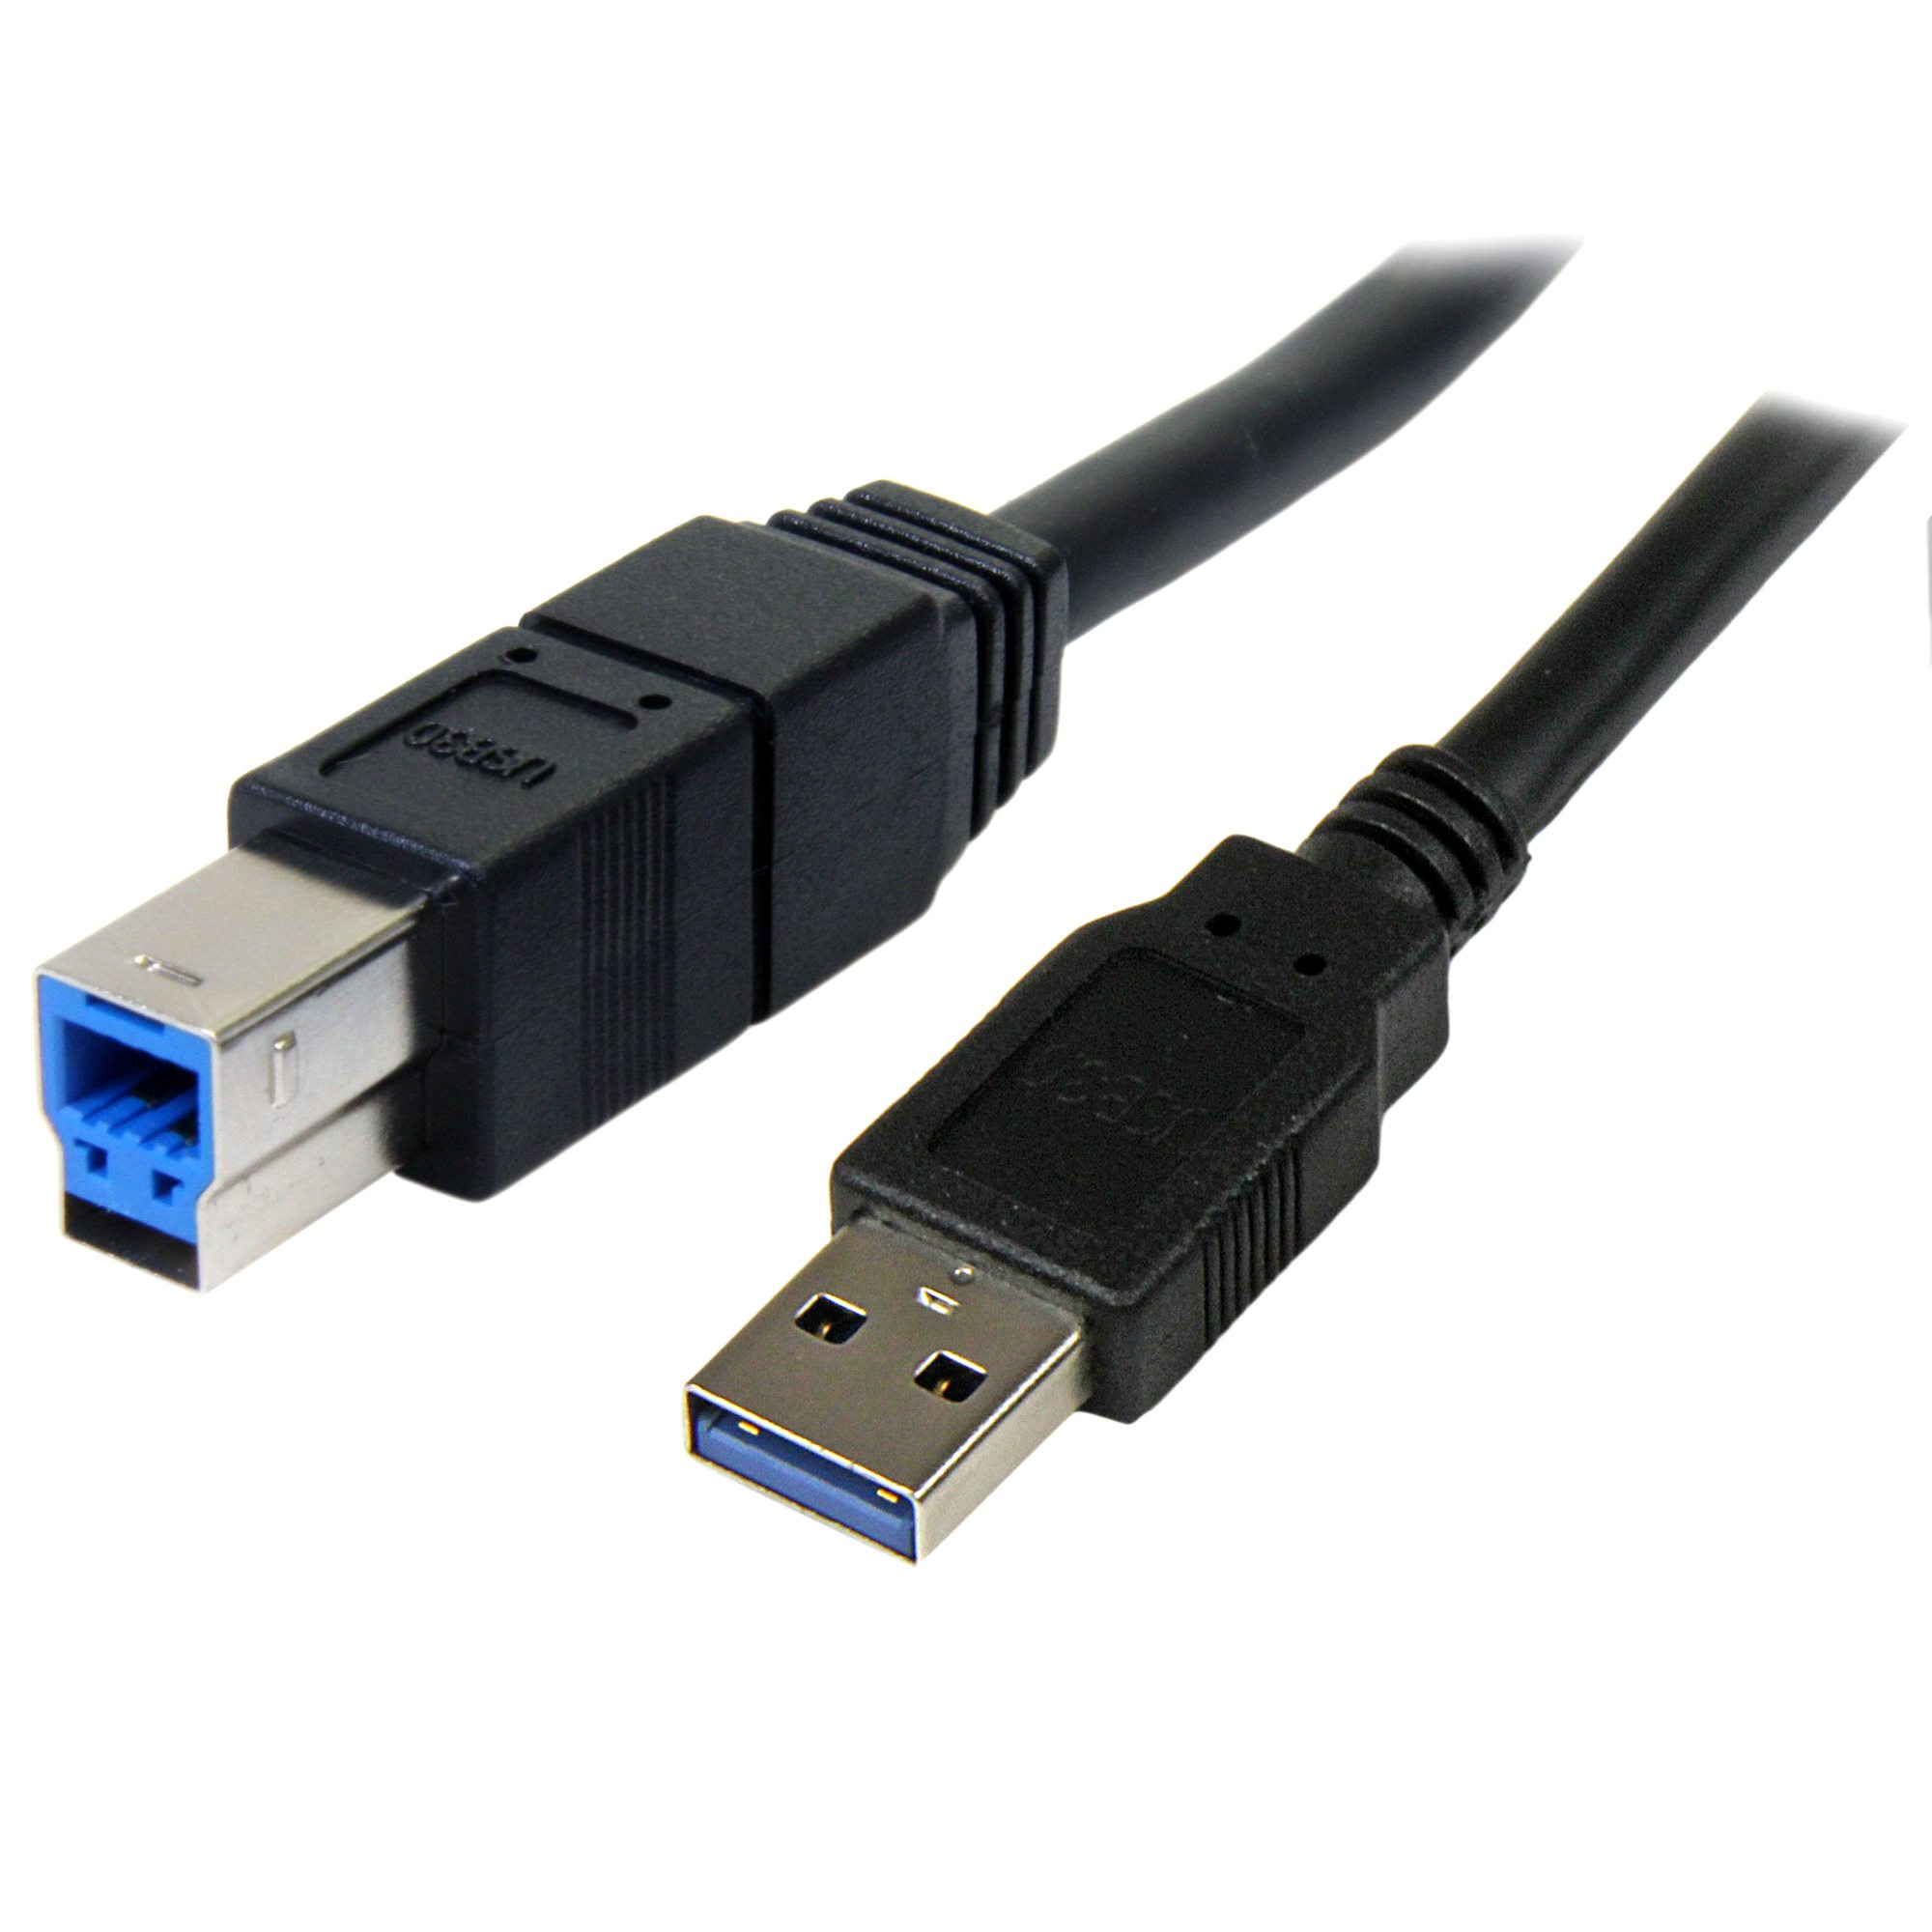 mor vejr Stille 3m Black SuperSpeed USB 3.0 Cable A to B - USB 3.0 Cables | StarTech.com  Europe